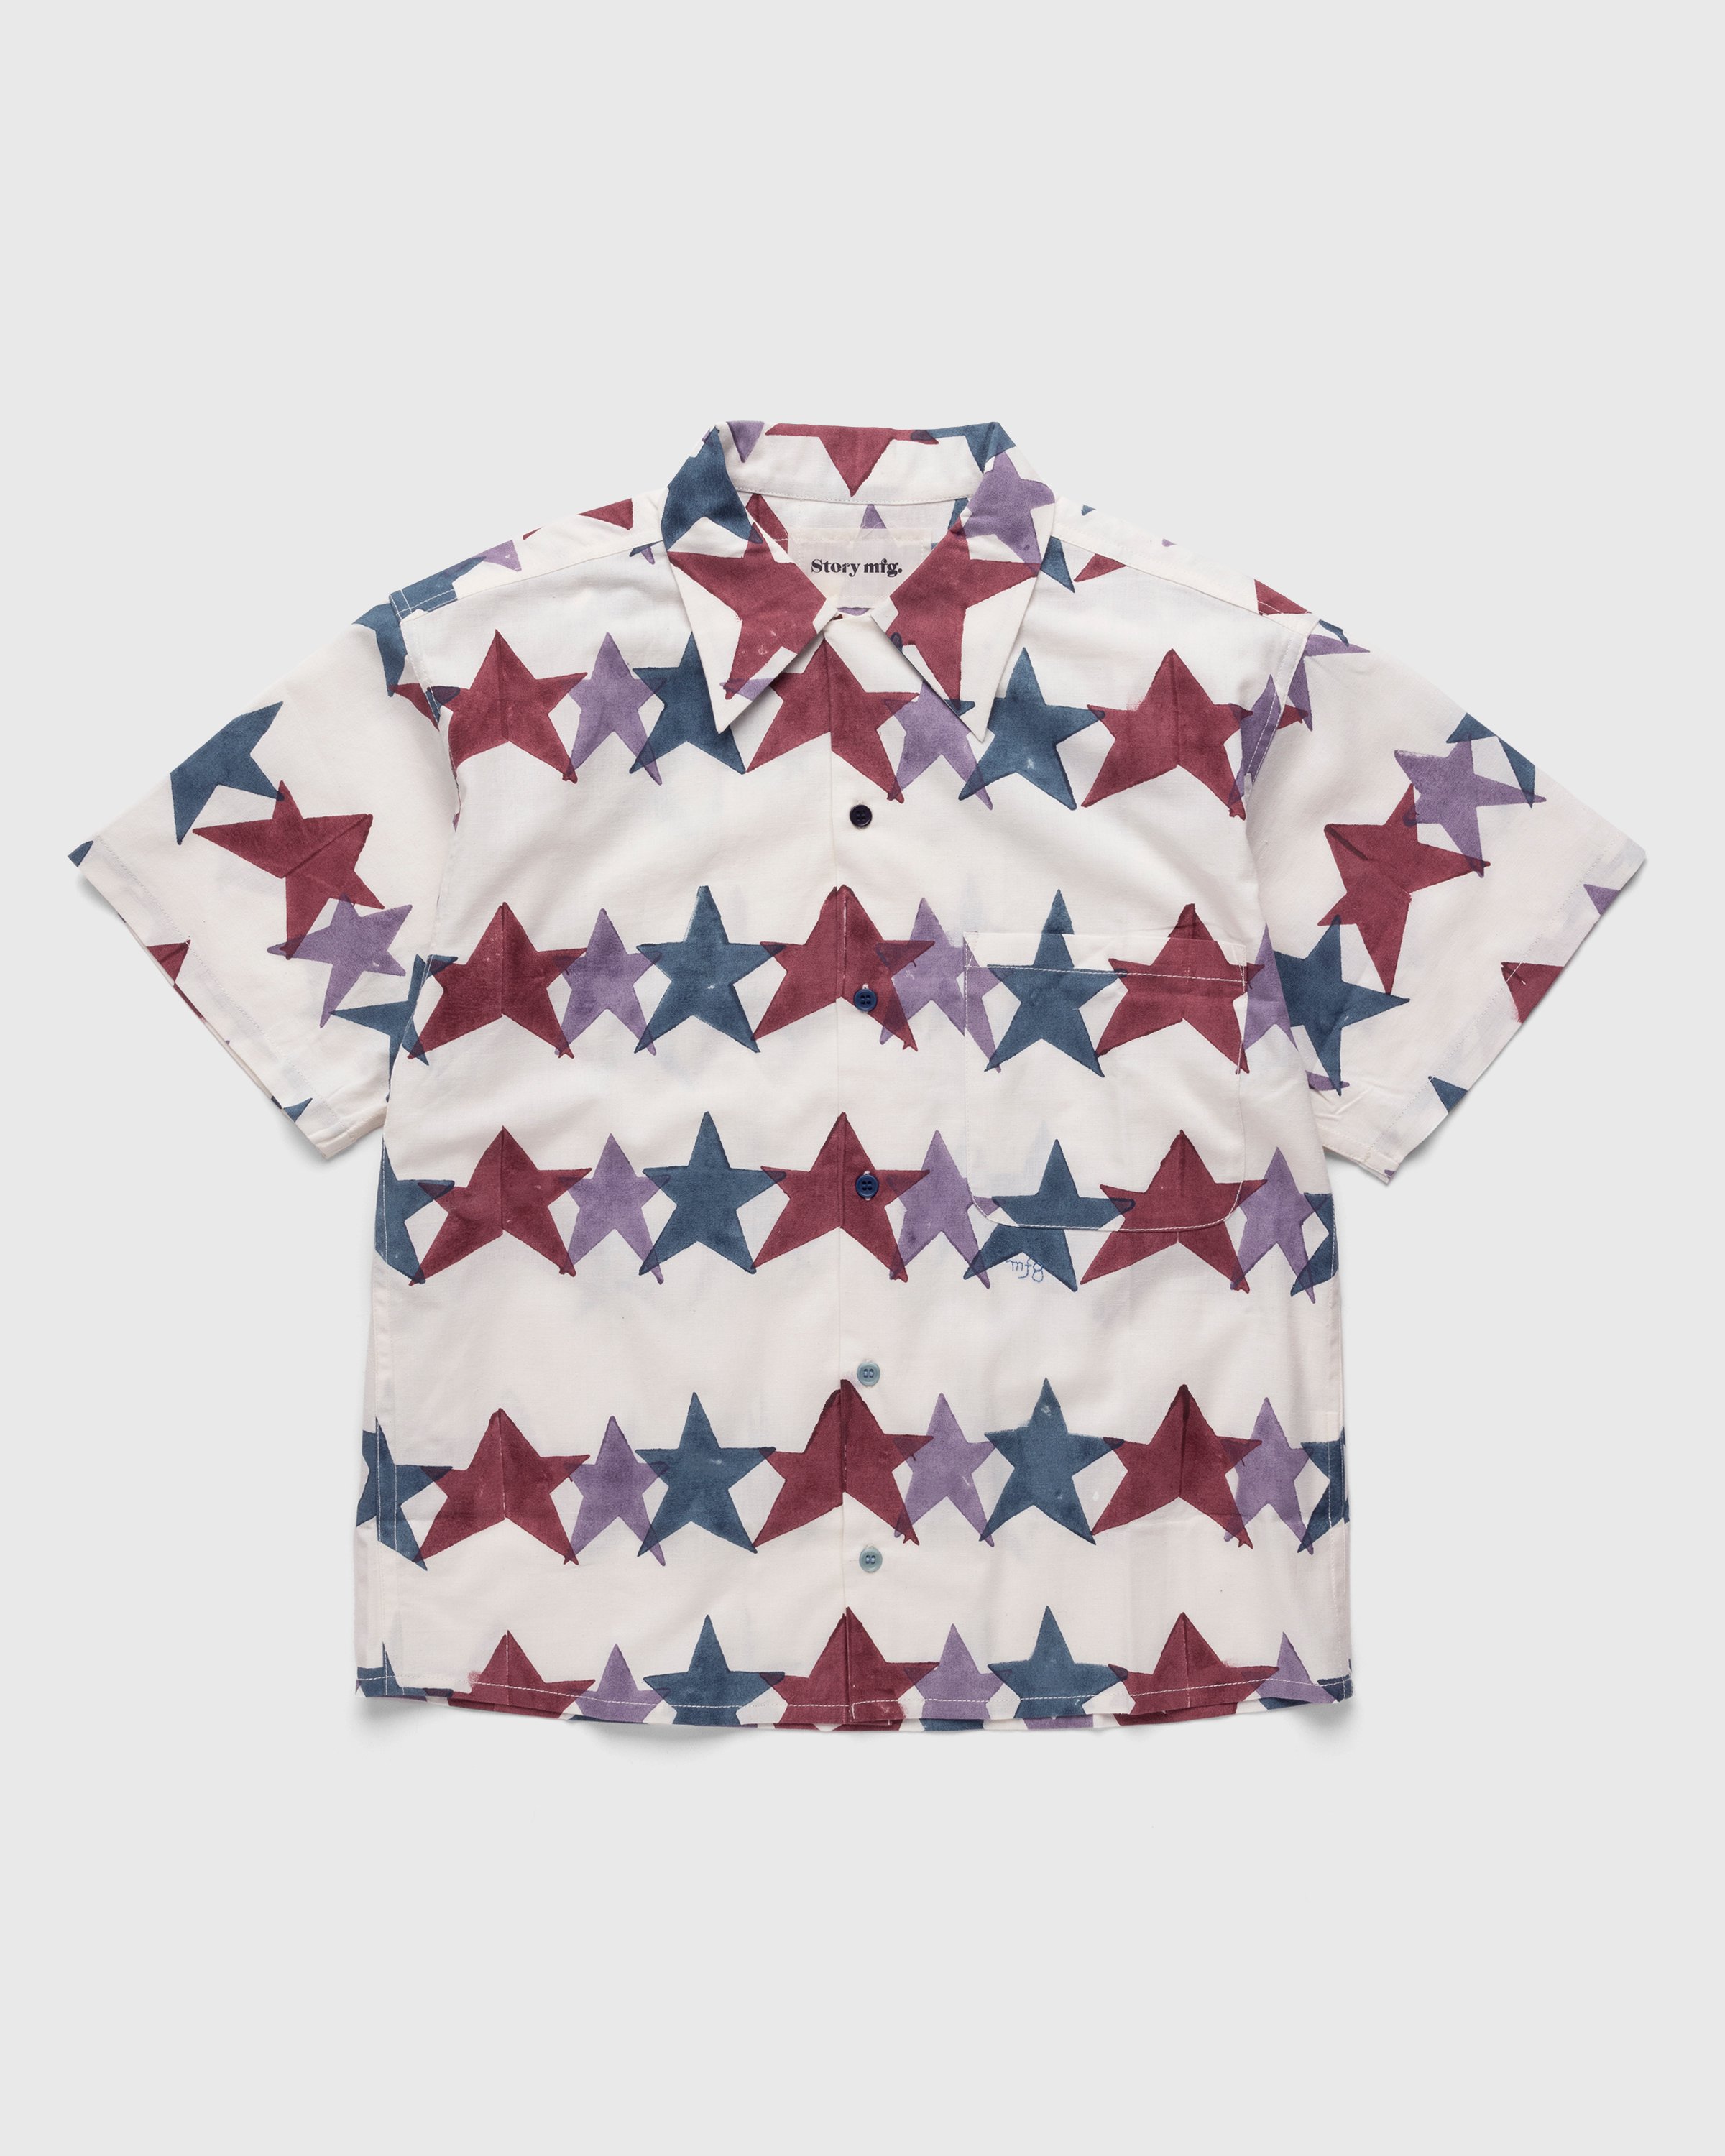 Story mfg. – Shore Shirt Star Block Print Multi